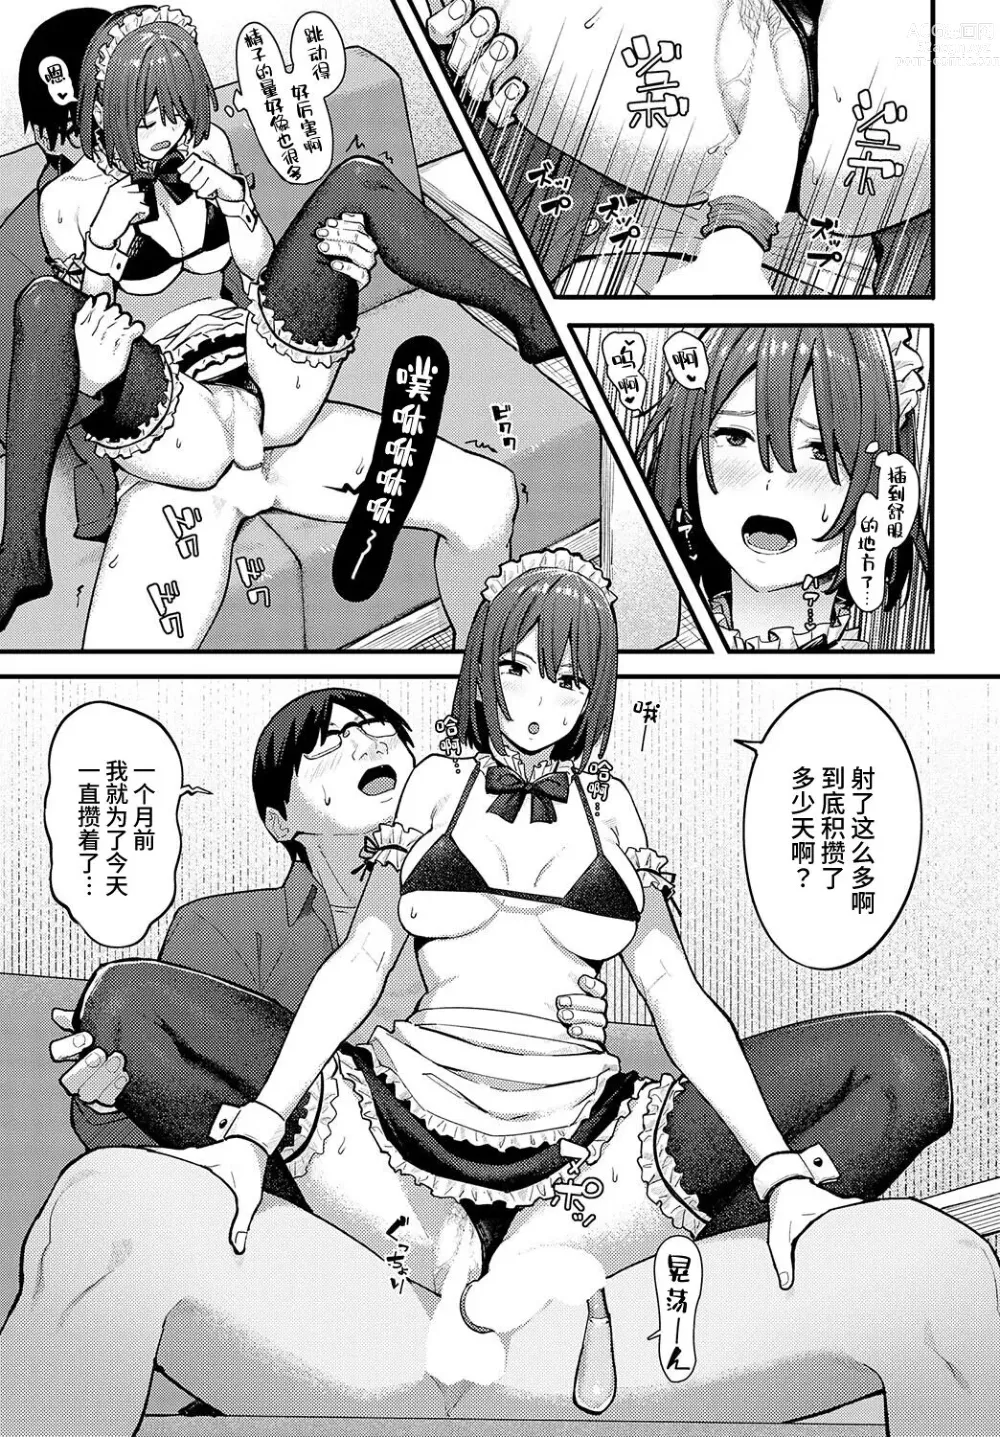 Page 7 of manga Shousetsuka to Asakurasan